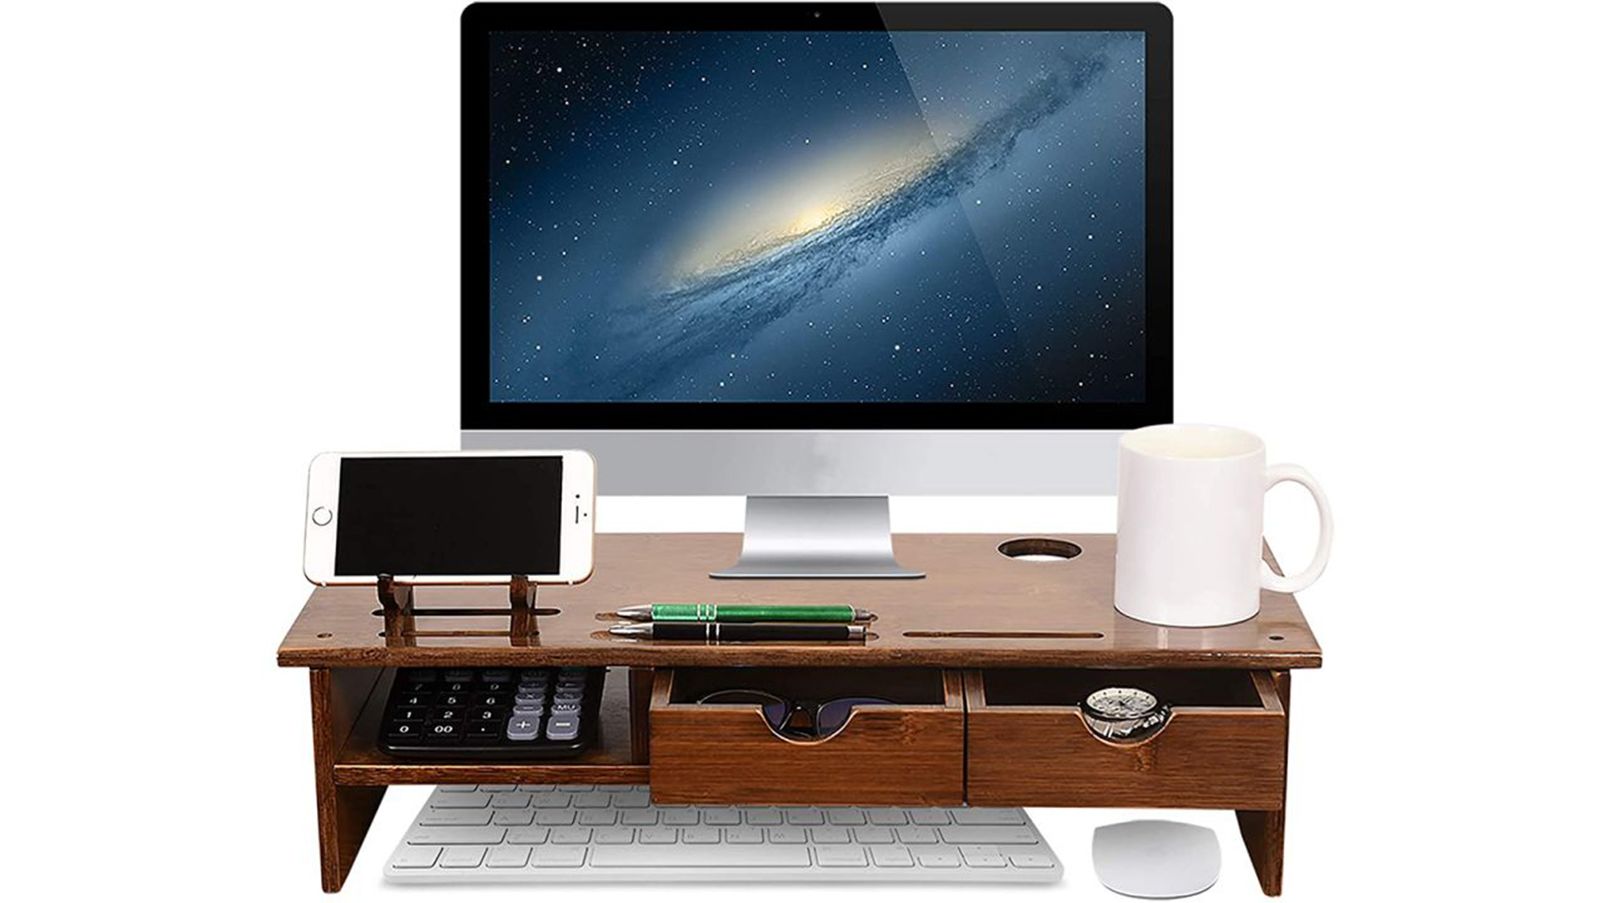 iStick-Multifunction-Desktop-Organizer  Desktop organization, Desk  organization, Cool office gadgets